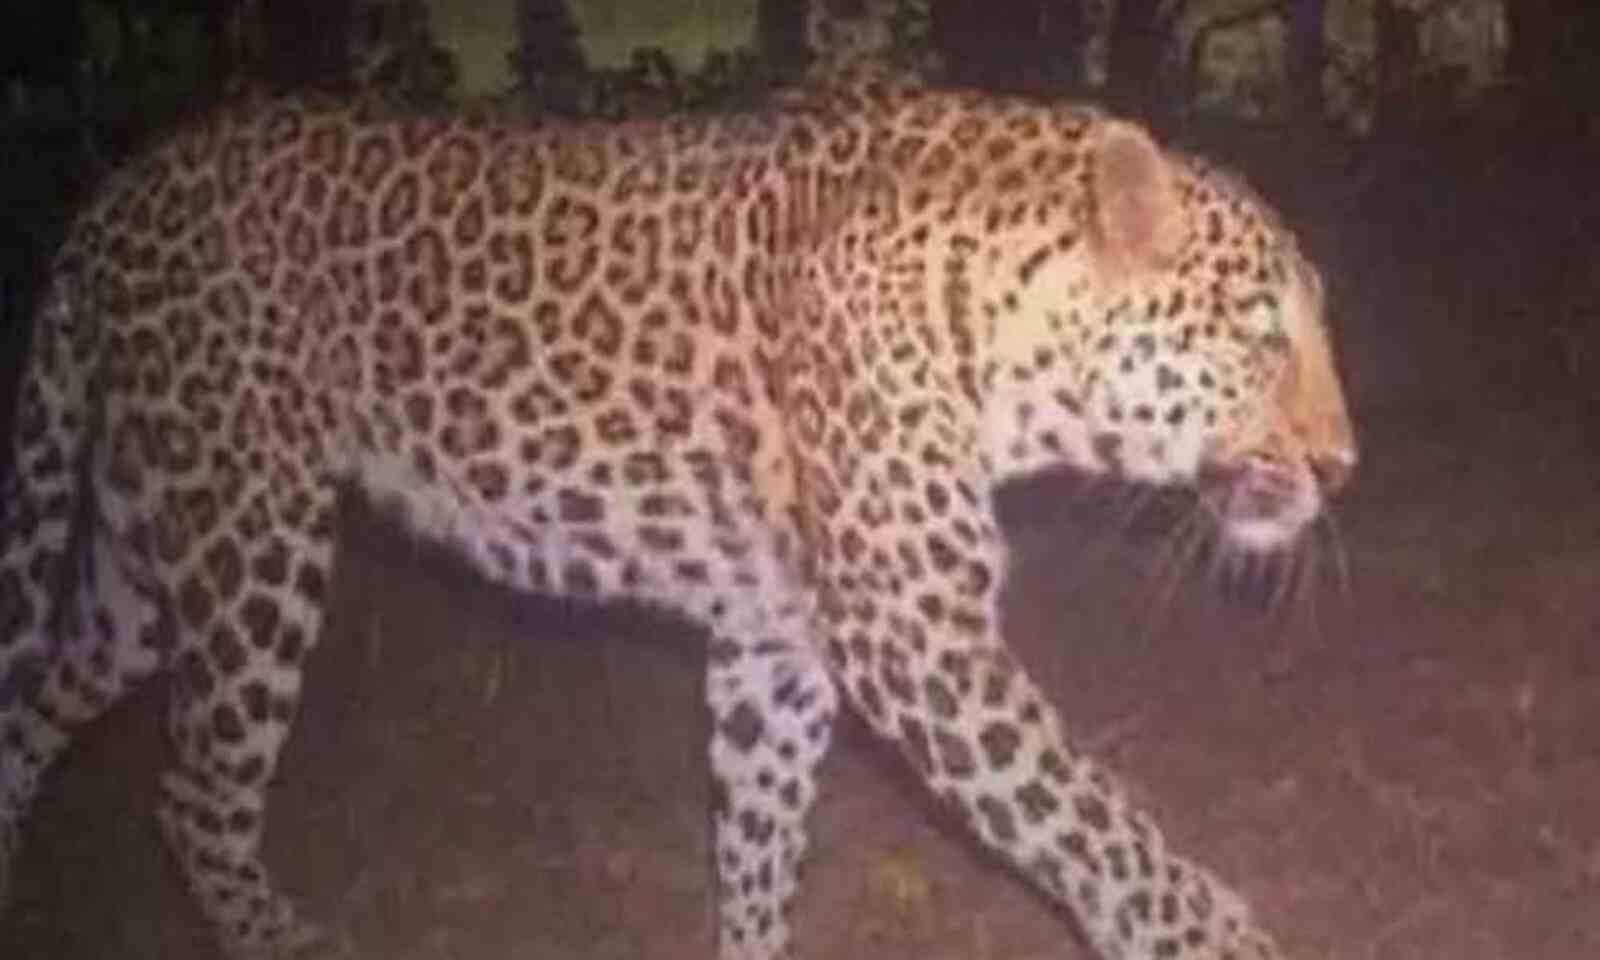 leopardspottedagainonhyderabadairportpremises